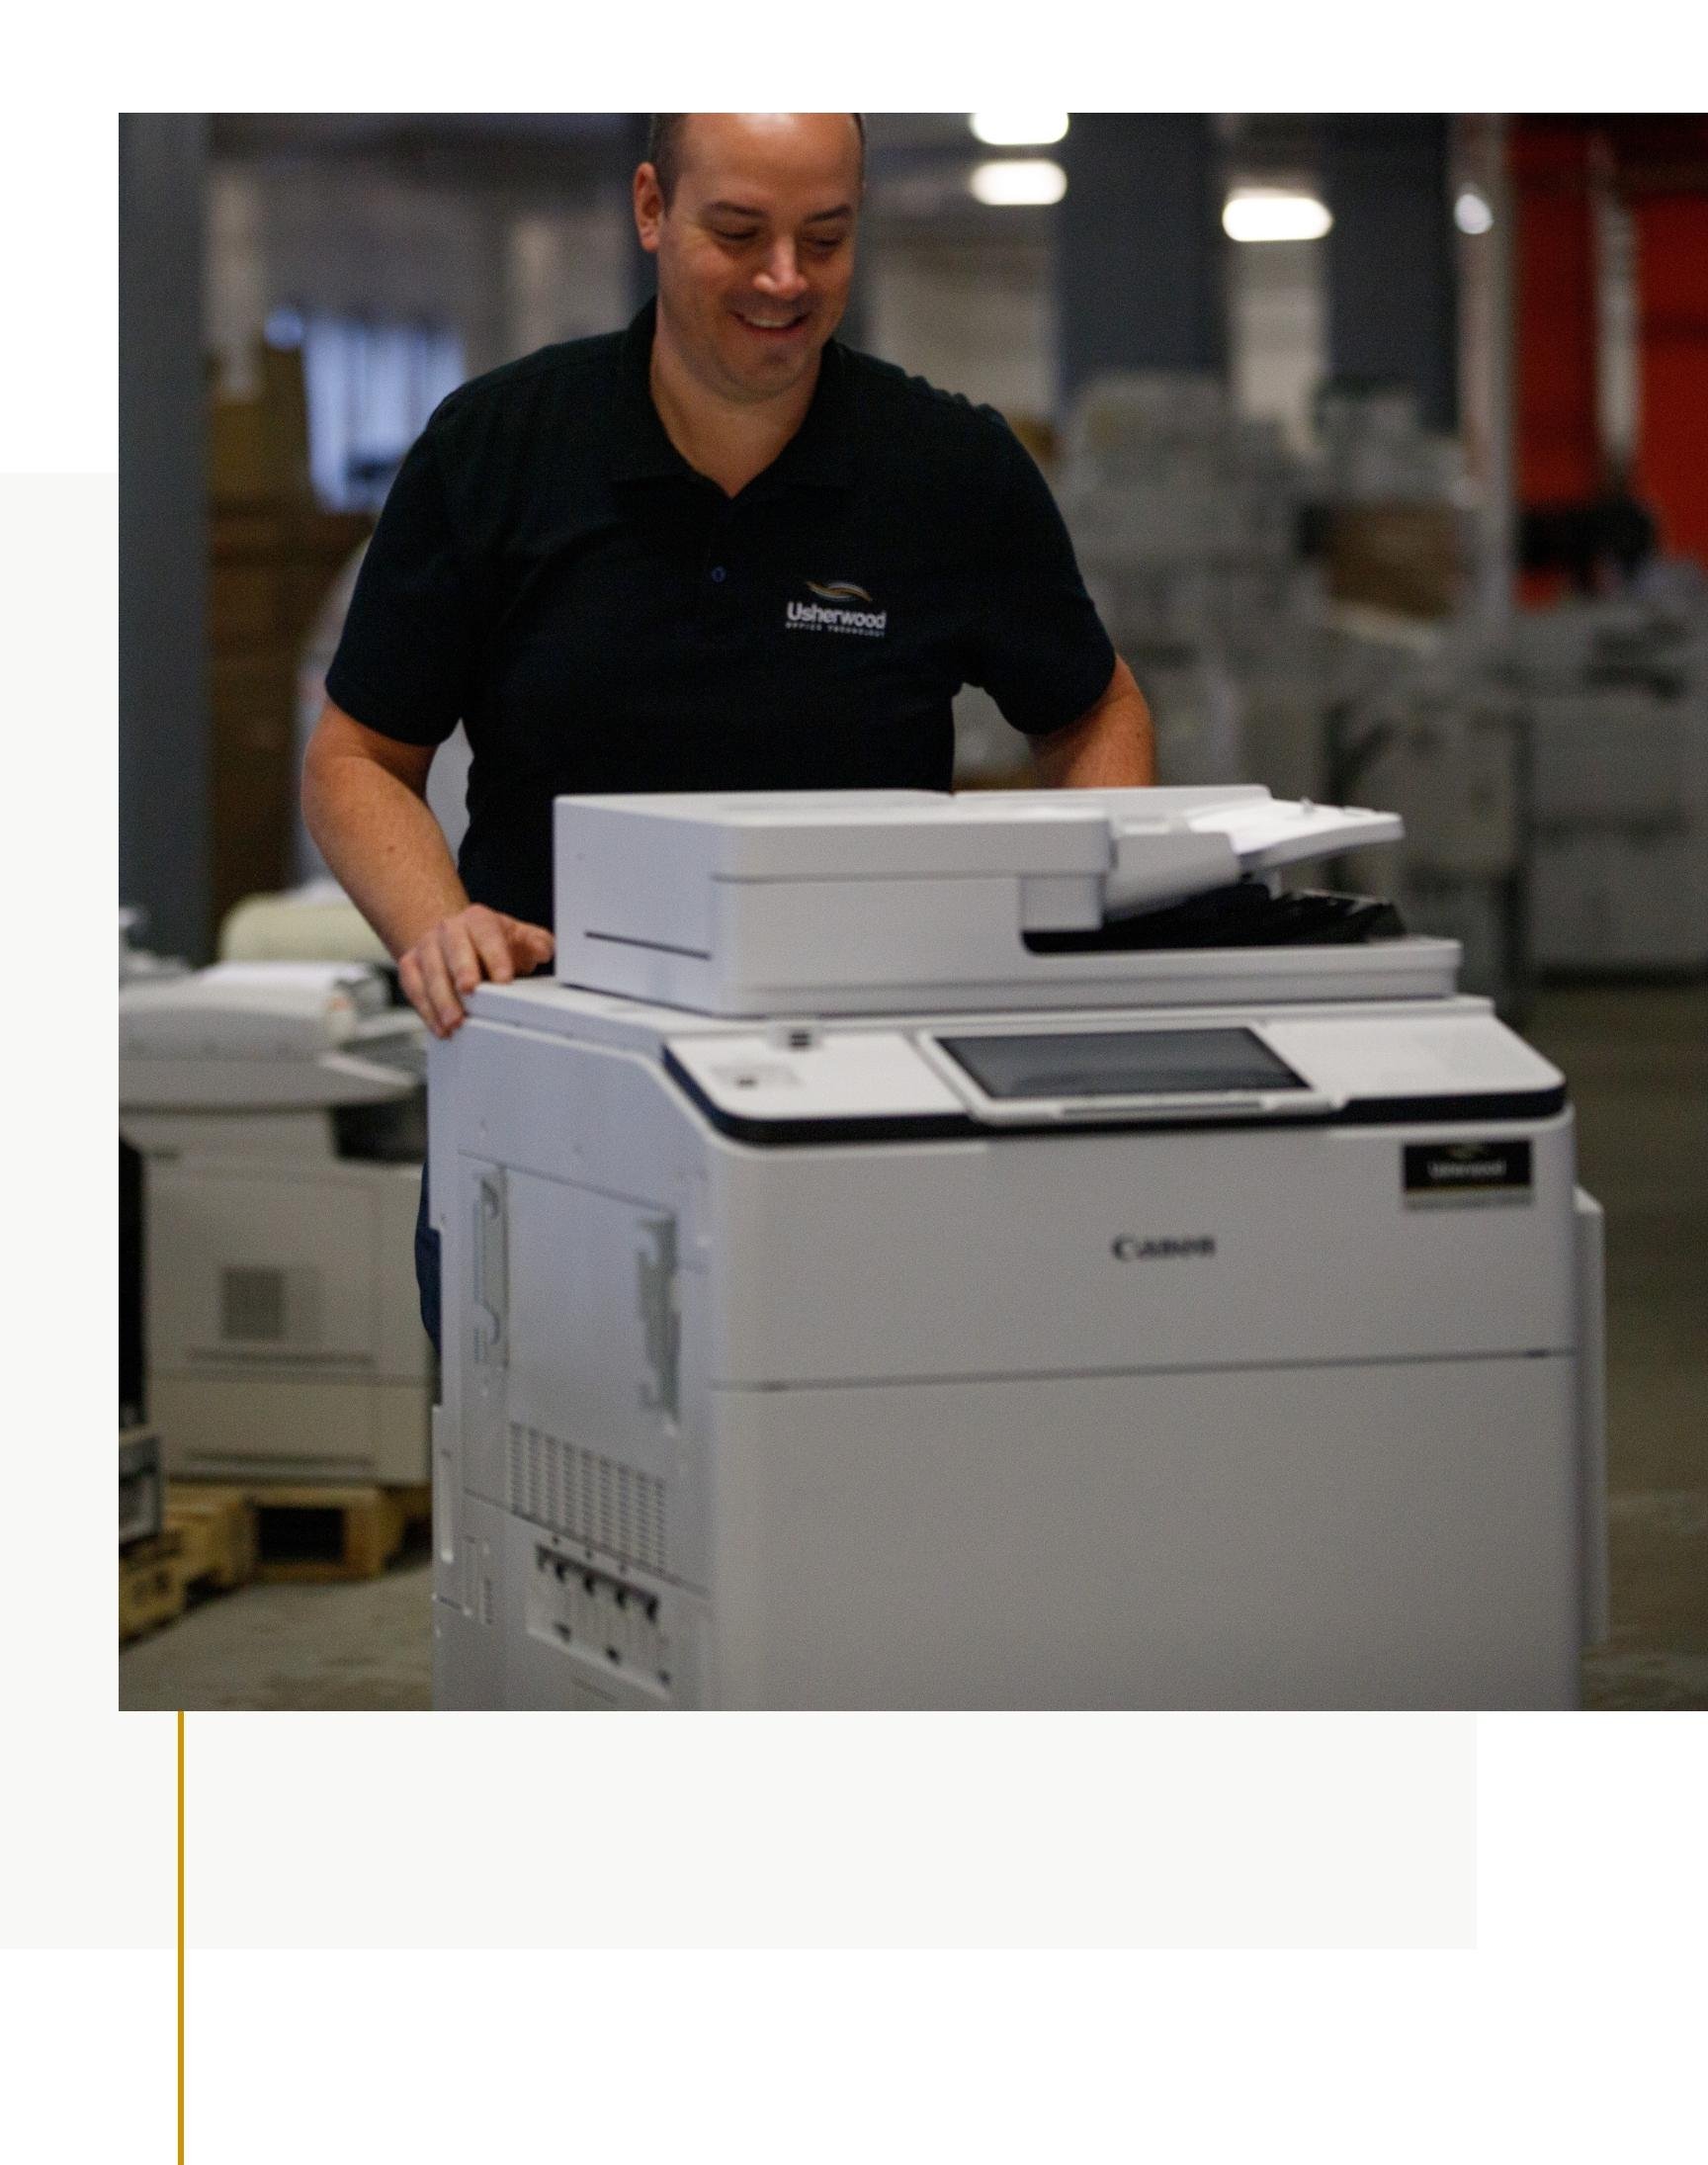 Usherwood employee pushing a copier preparing it for shipment